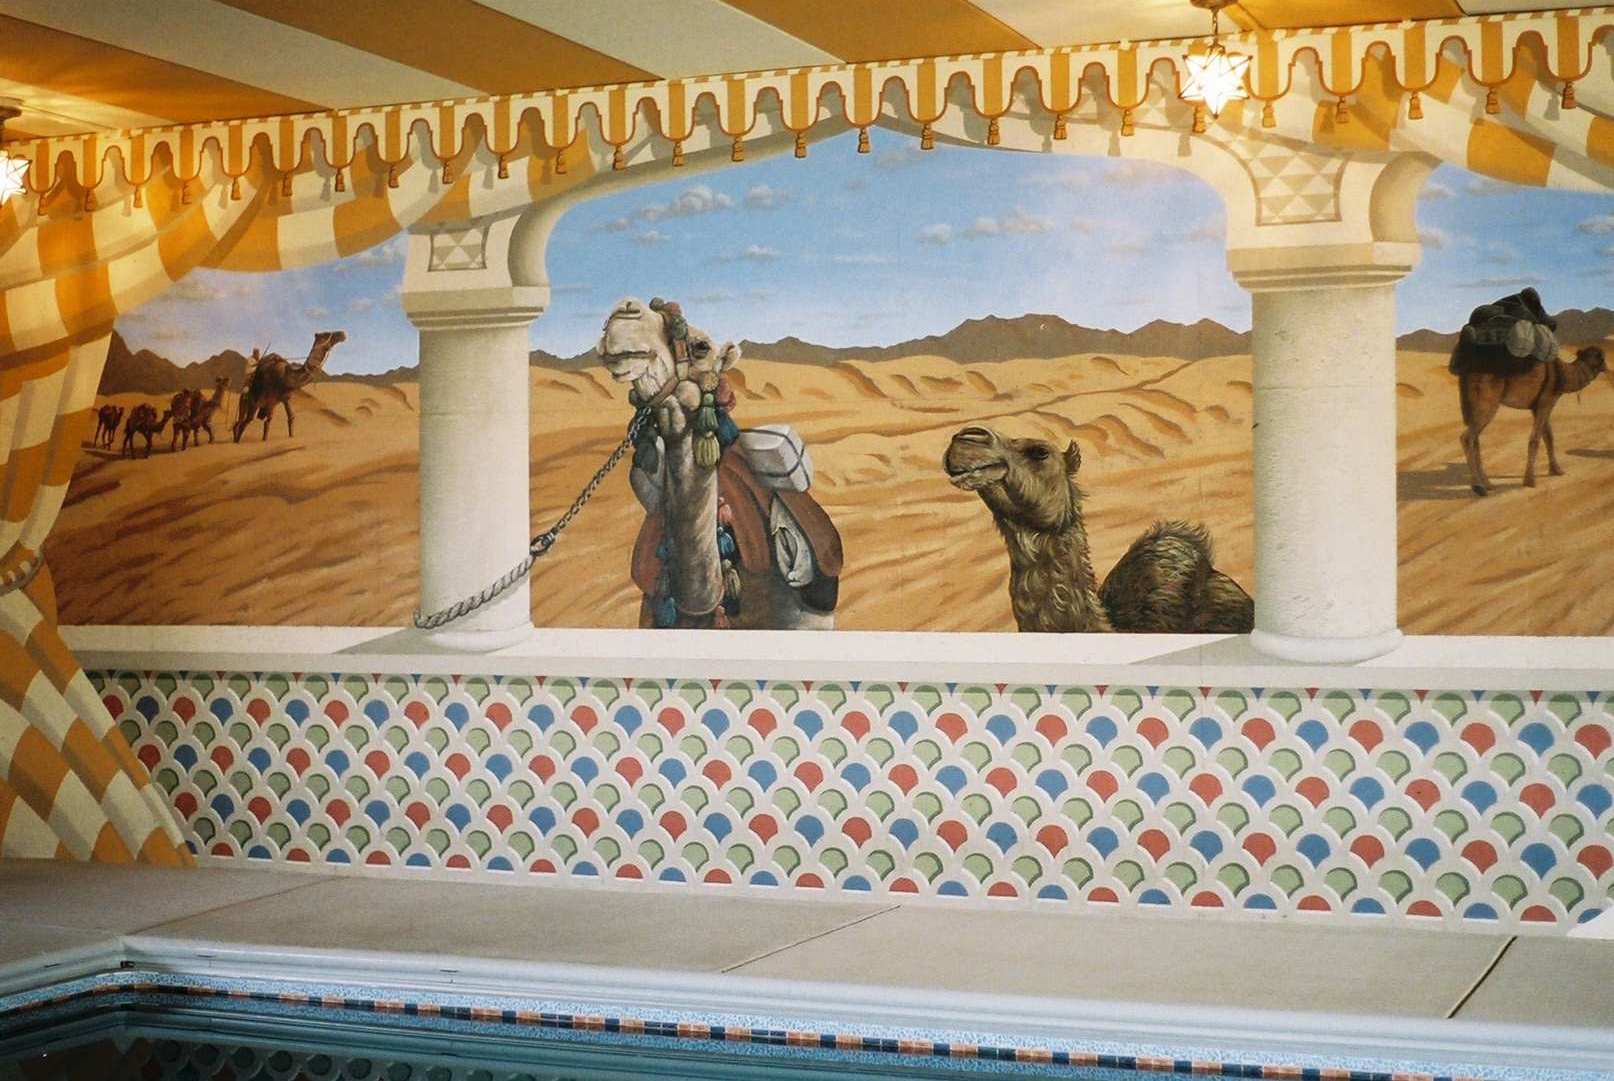 Moroccan-Indoor-Pool-Mural-Sized.jpg